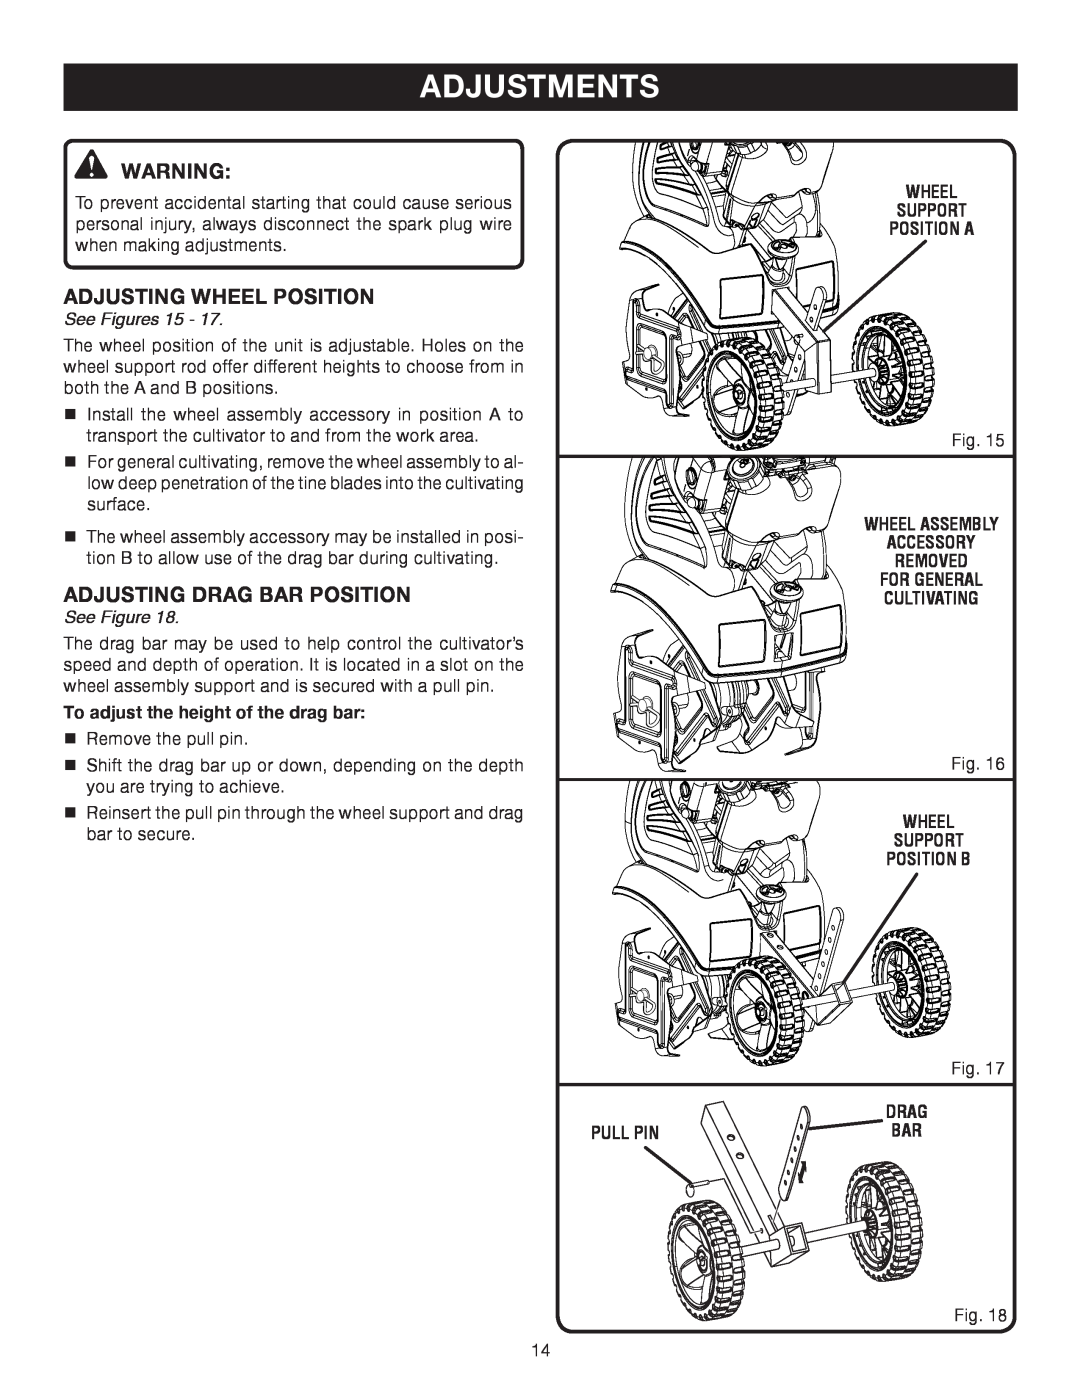 Ryobi RY60512 manual Adjustments, Adjusting Wheel Position, Adjusting Drag Bar Position, See Figures, Pull Pin, Cultivating 